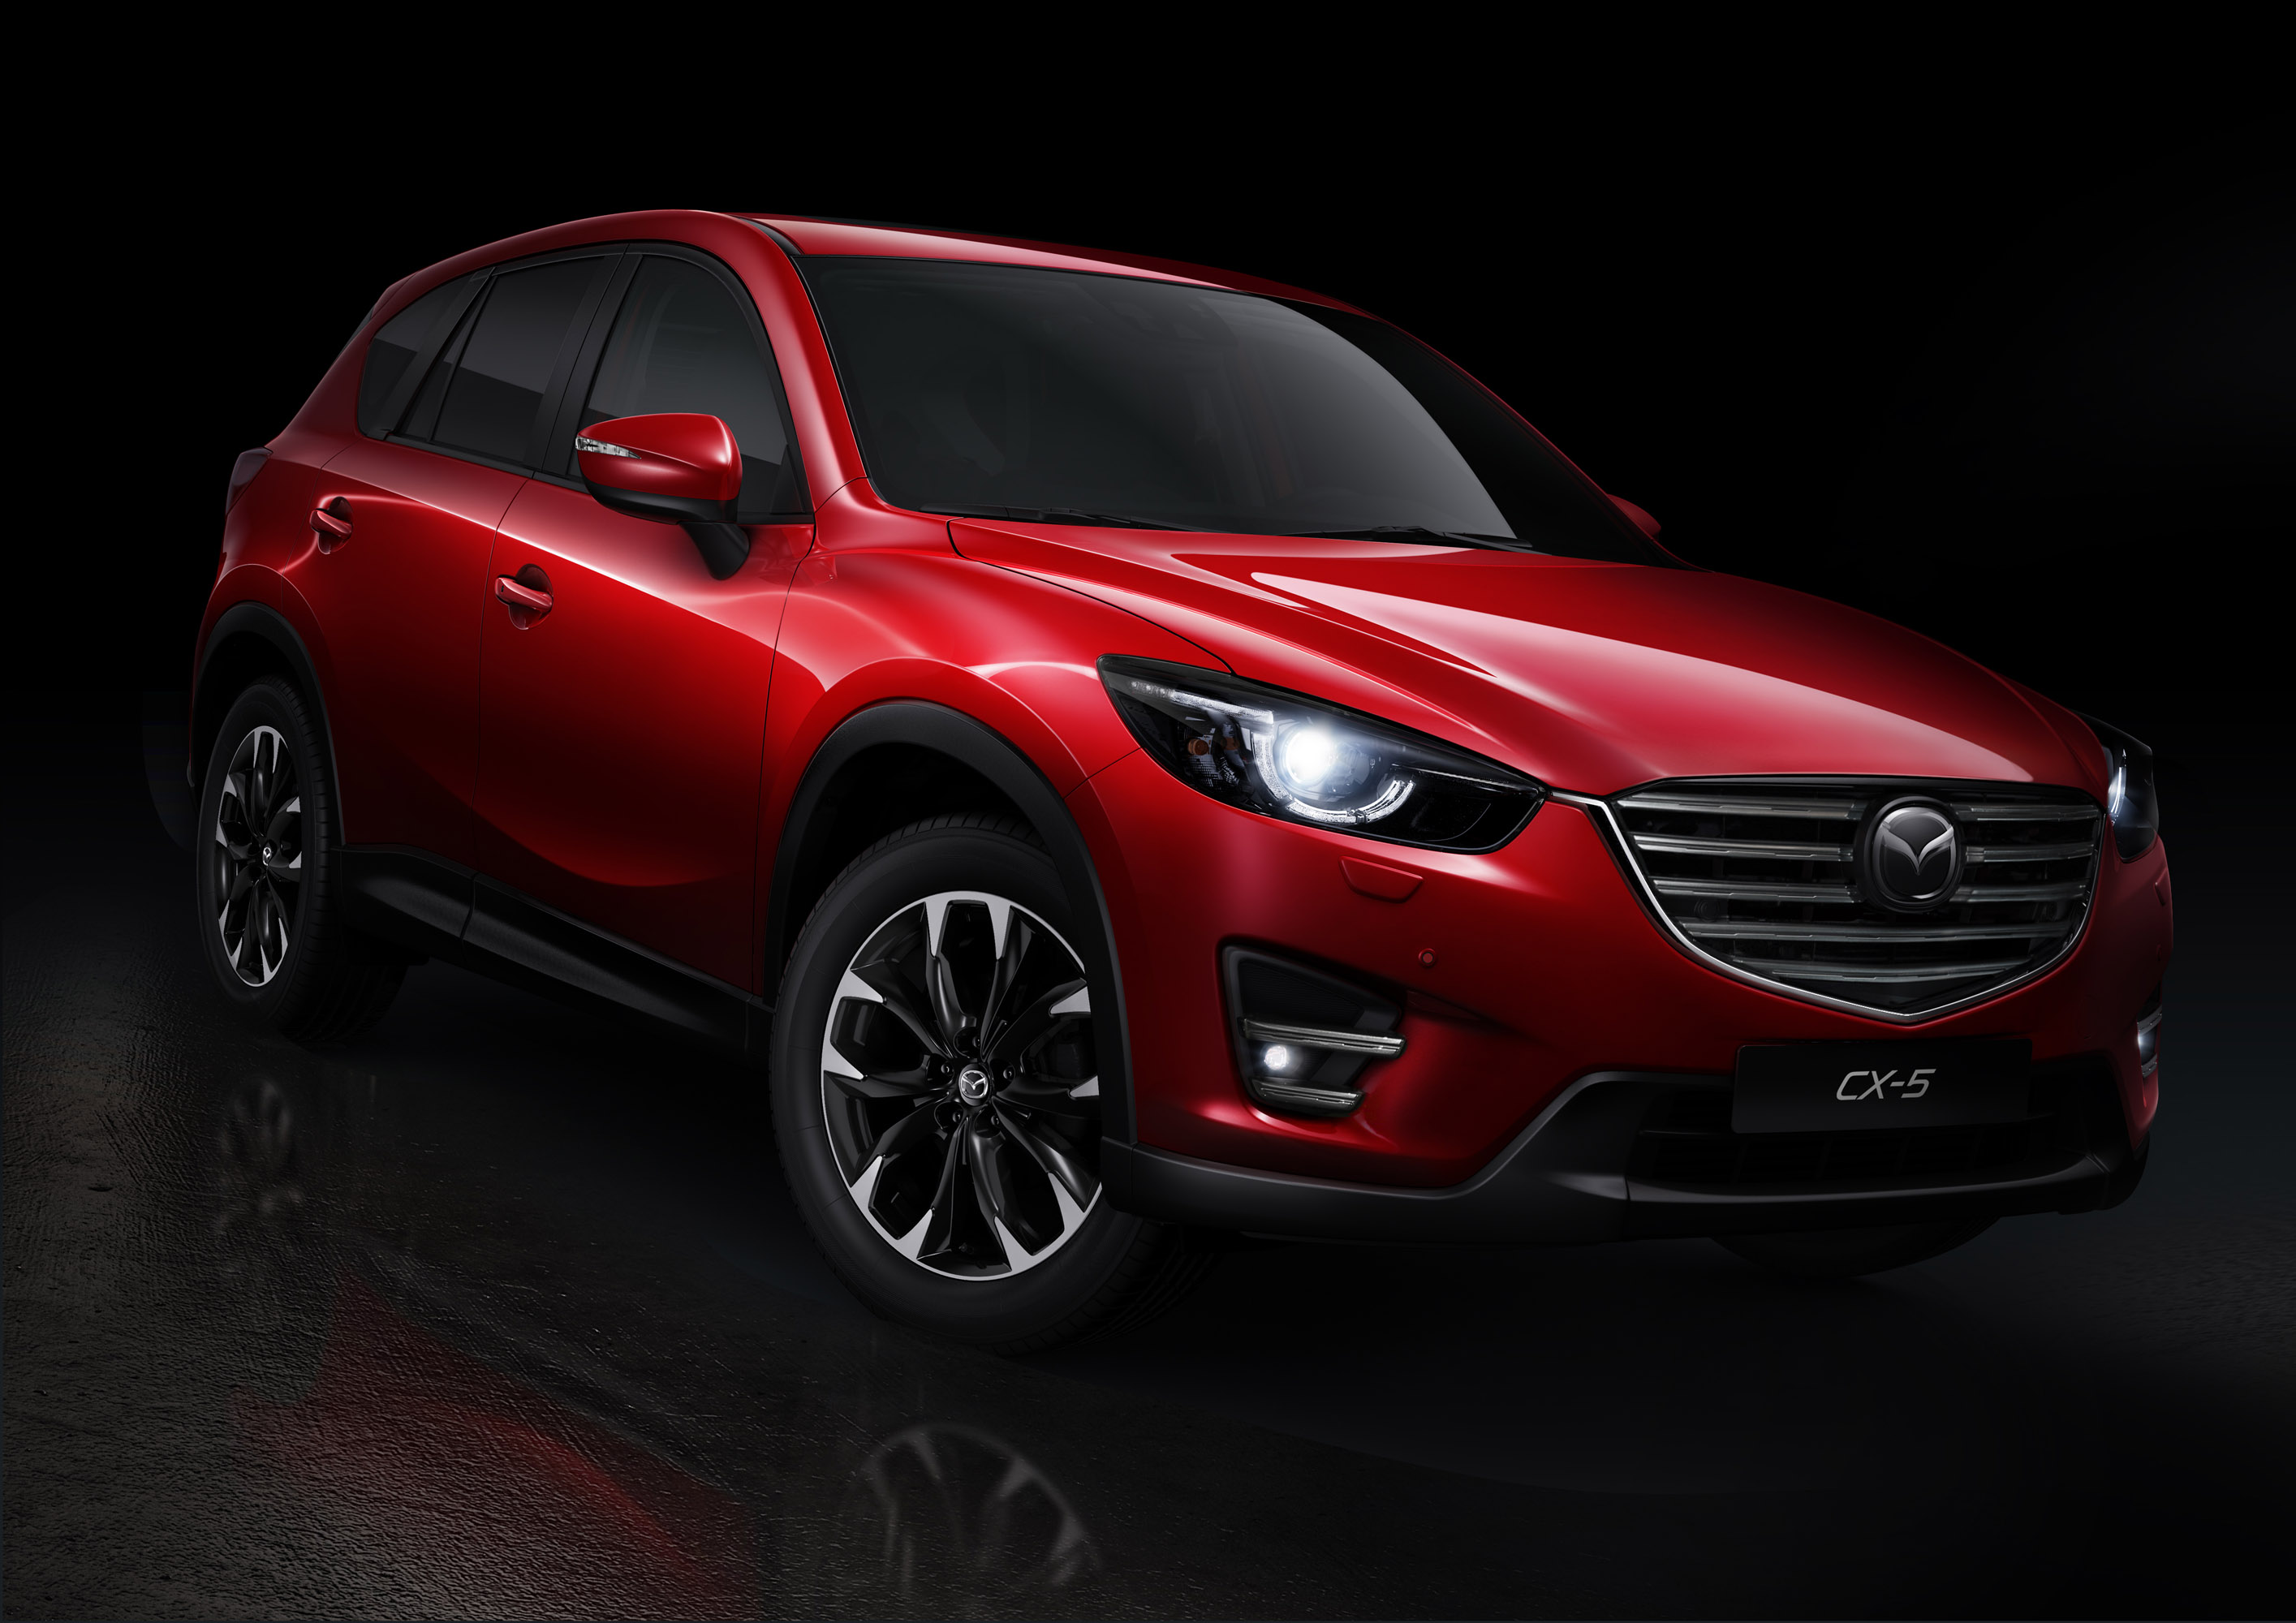 Red mazda. Mazda CX-5. Mazda CX-5 2016. Мазда СХ-5 2016. Мазда cx5 2016.